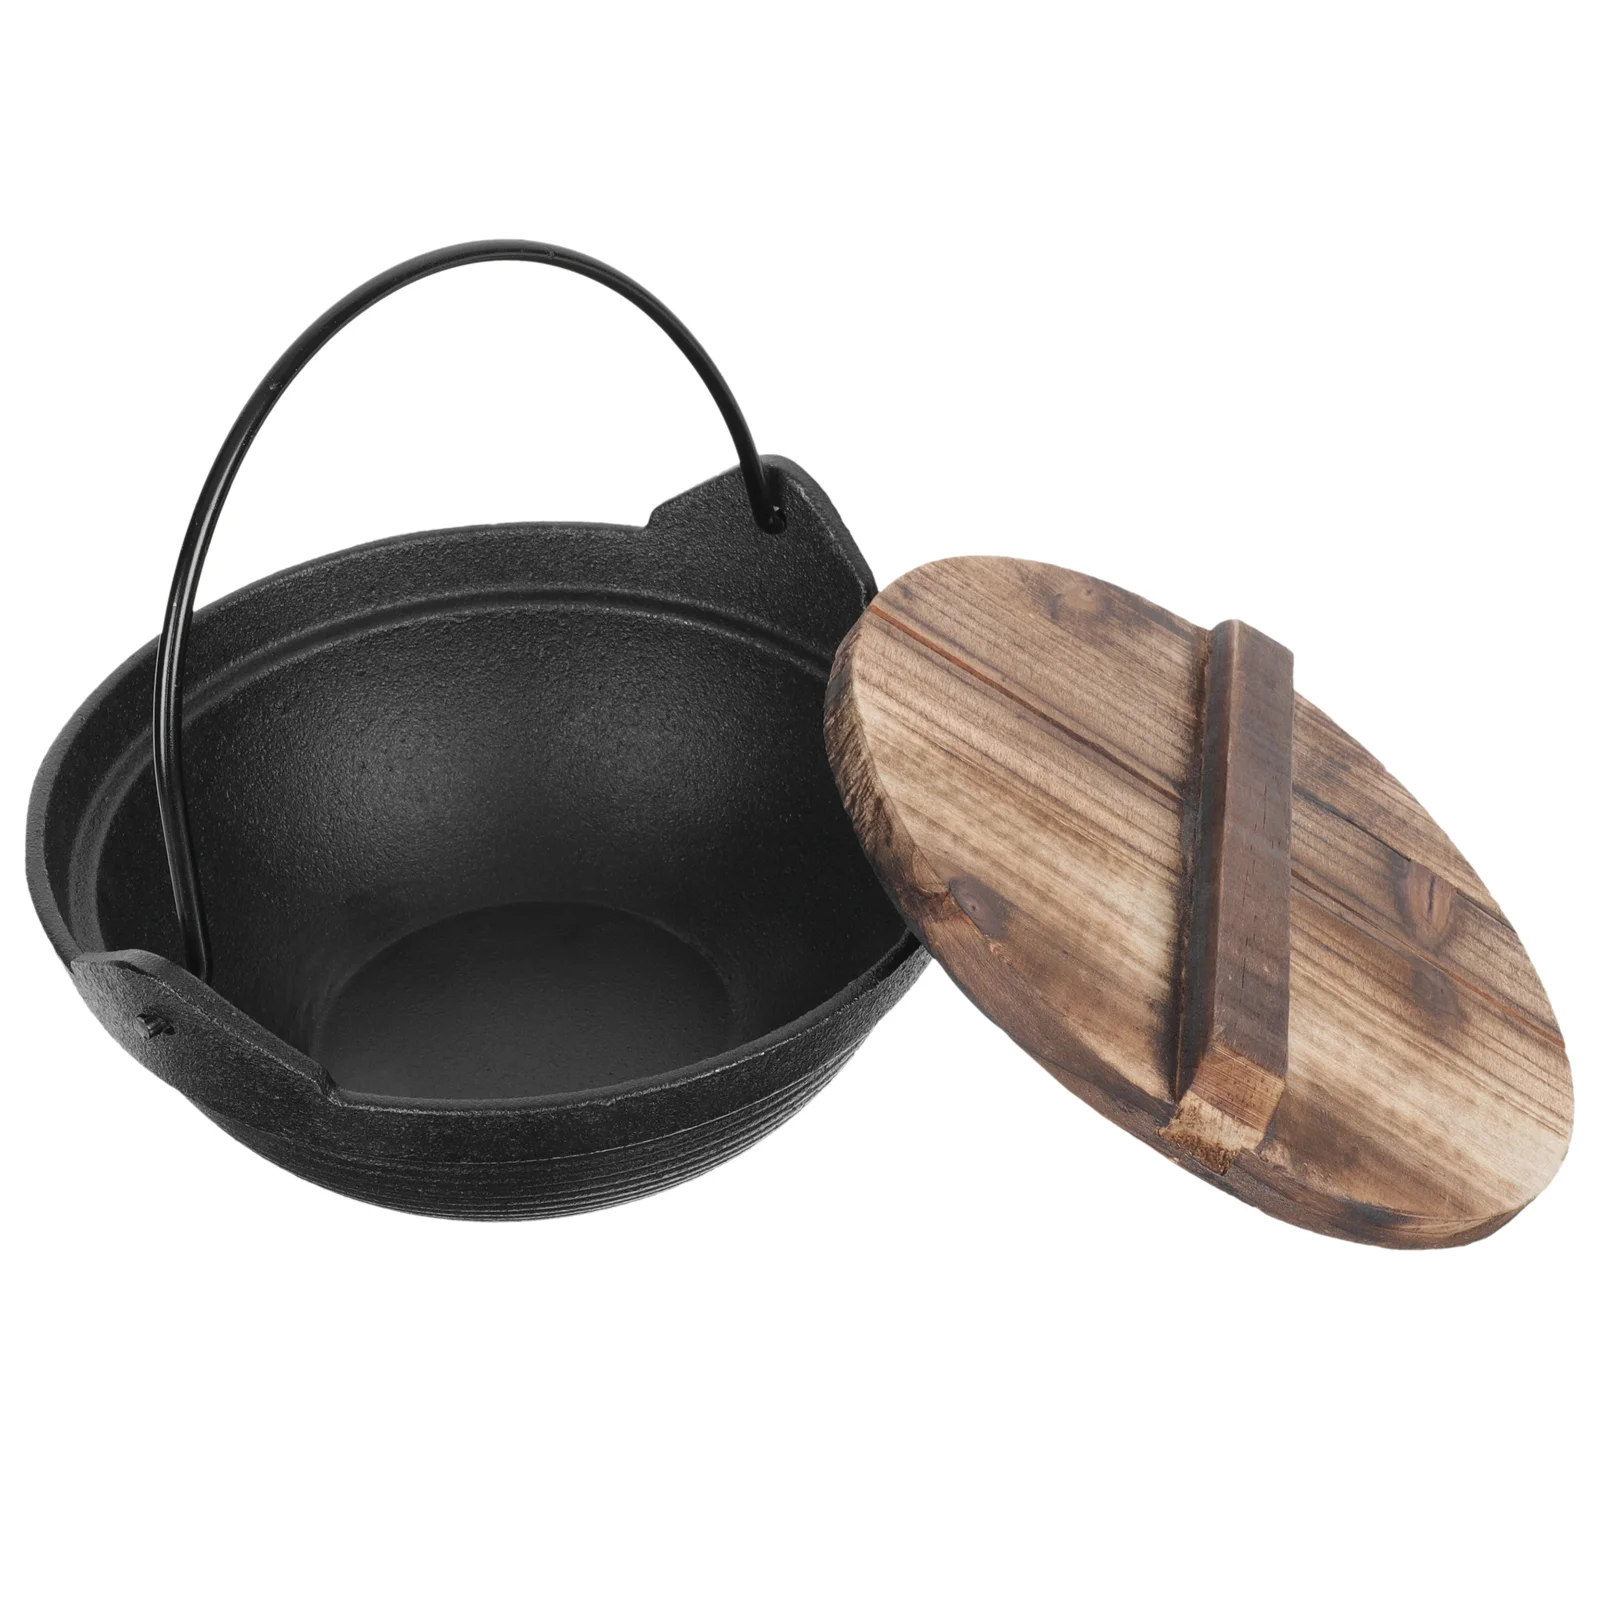 https://ae01.alicdn.com/kf/S7e8fc7a1e0ce485b85fe3a812369529ap/Pot-Shabu-Nabe-Pan-Sukiyaki-Japanese-Hot-Iron-Single-Paella-Spanish-Serving-Cooking-Cast-Oven-Casserolecamp.jpg